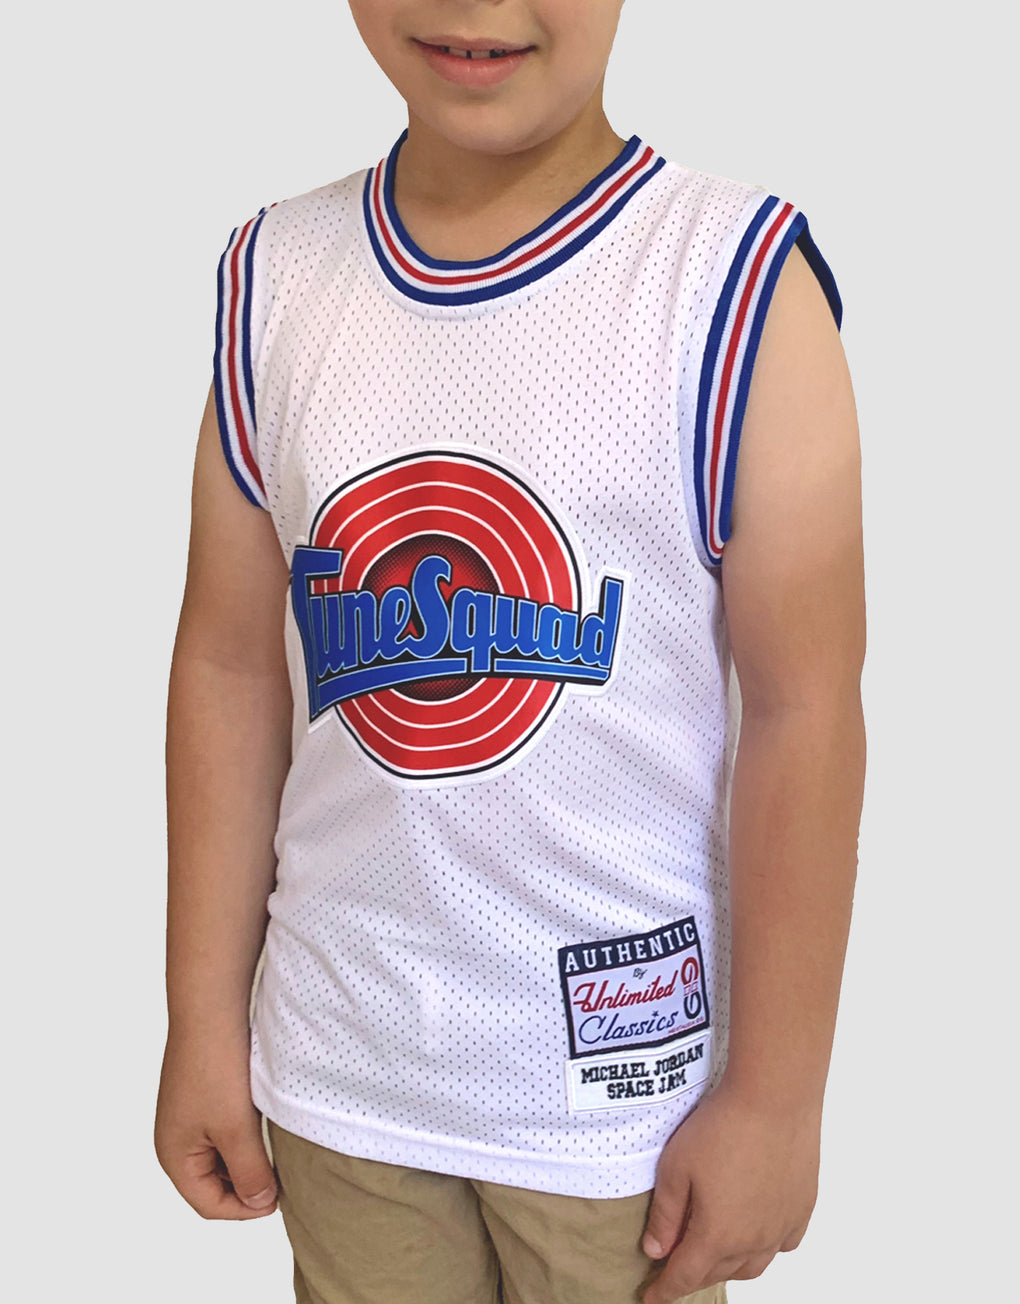 space jam basketball shirt